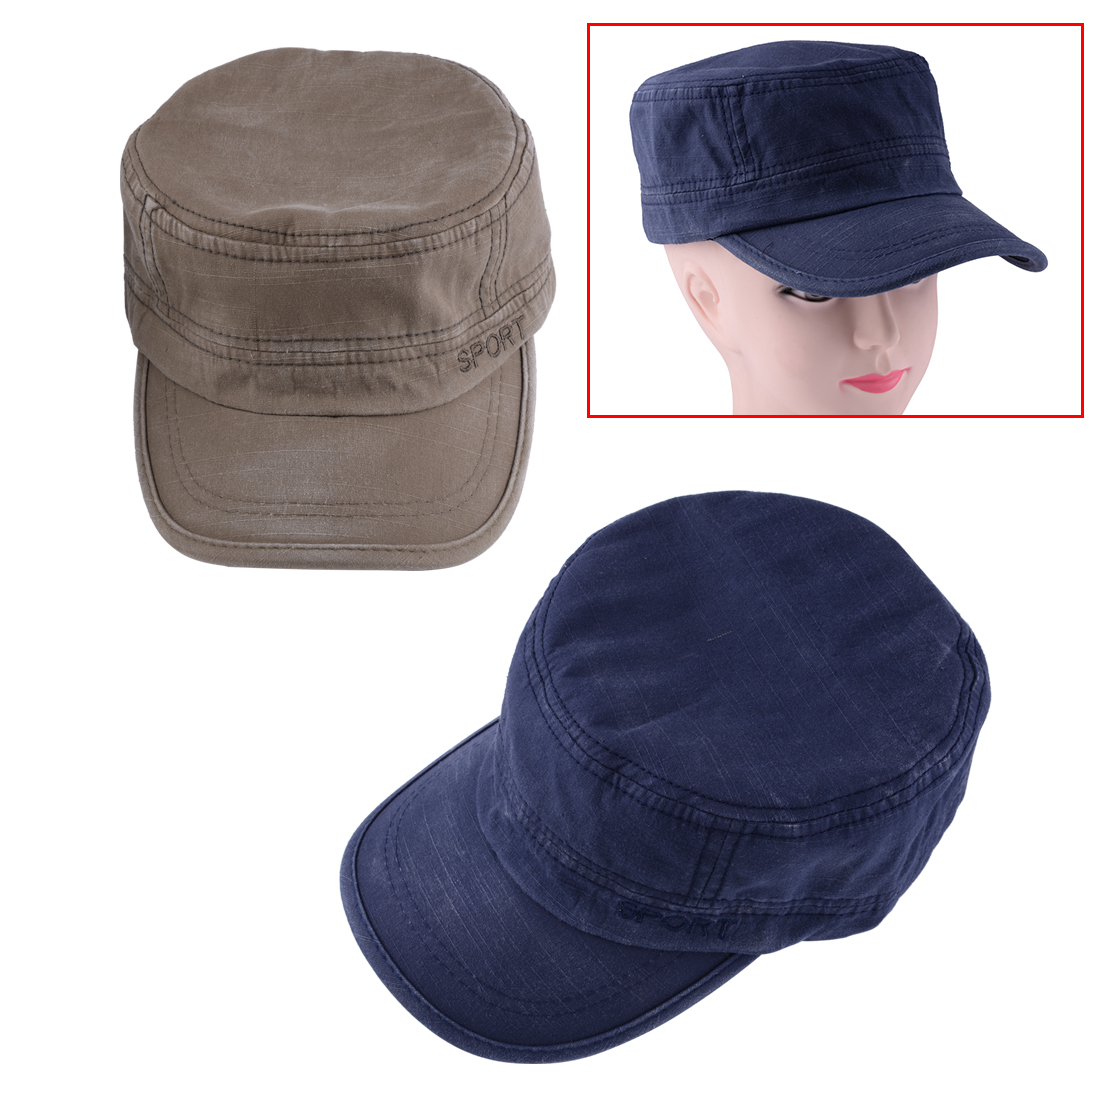 Military Hat For Trucker Driver Cabbie Cotton Men Flat Cap Army Cap